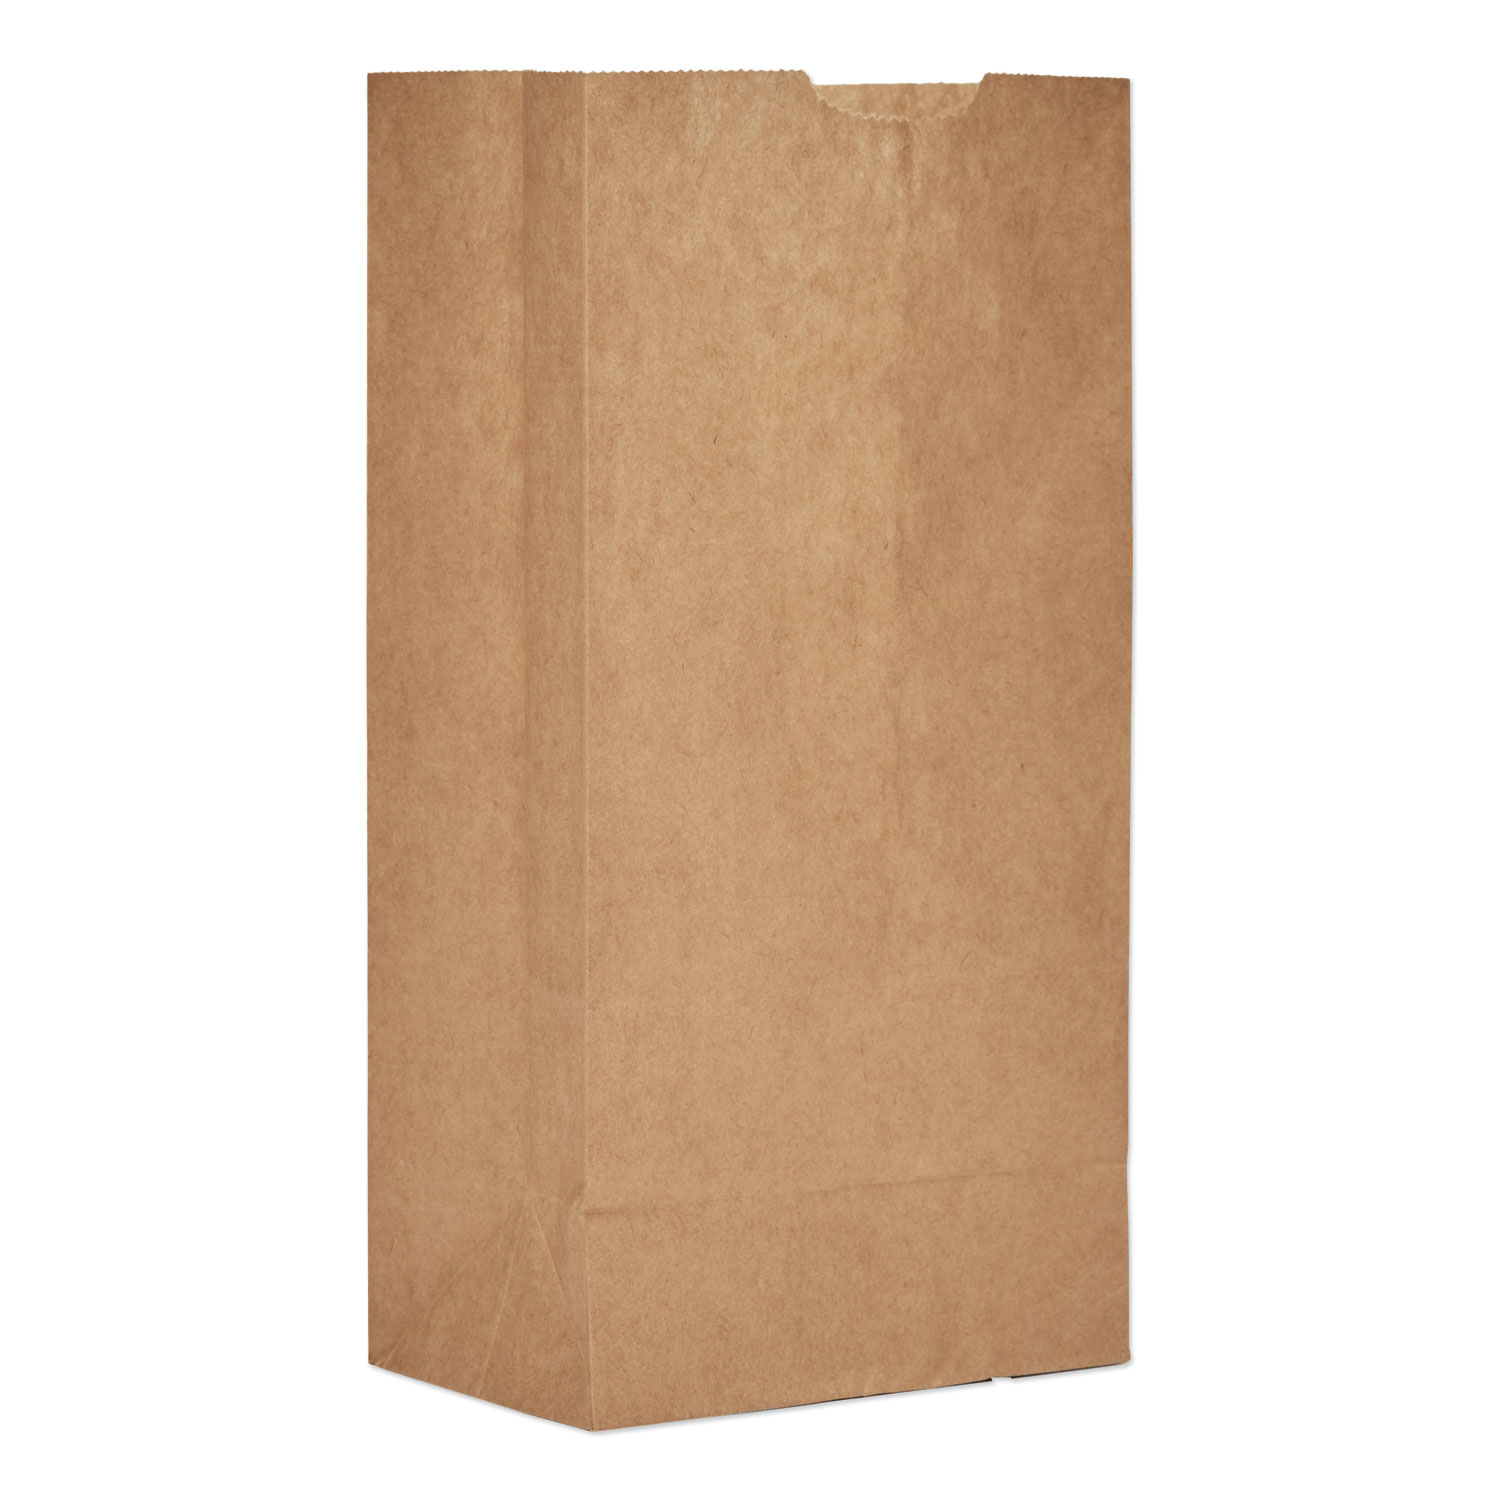  General 30904 Grocery Paper Bags, 50 lbs Capacity, #4, 5w x 3.13d x 9.75h, Kraft, 500 Bags (BAGGX4500) 